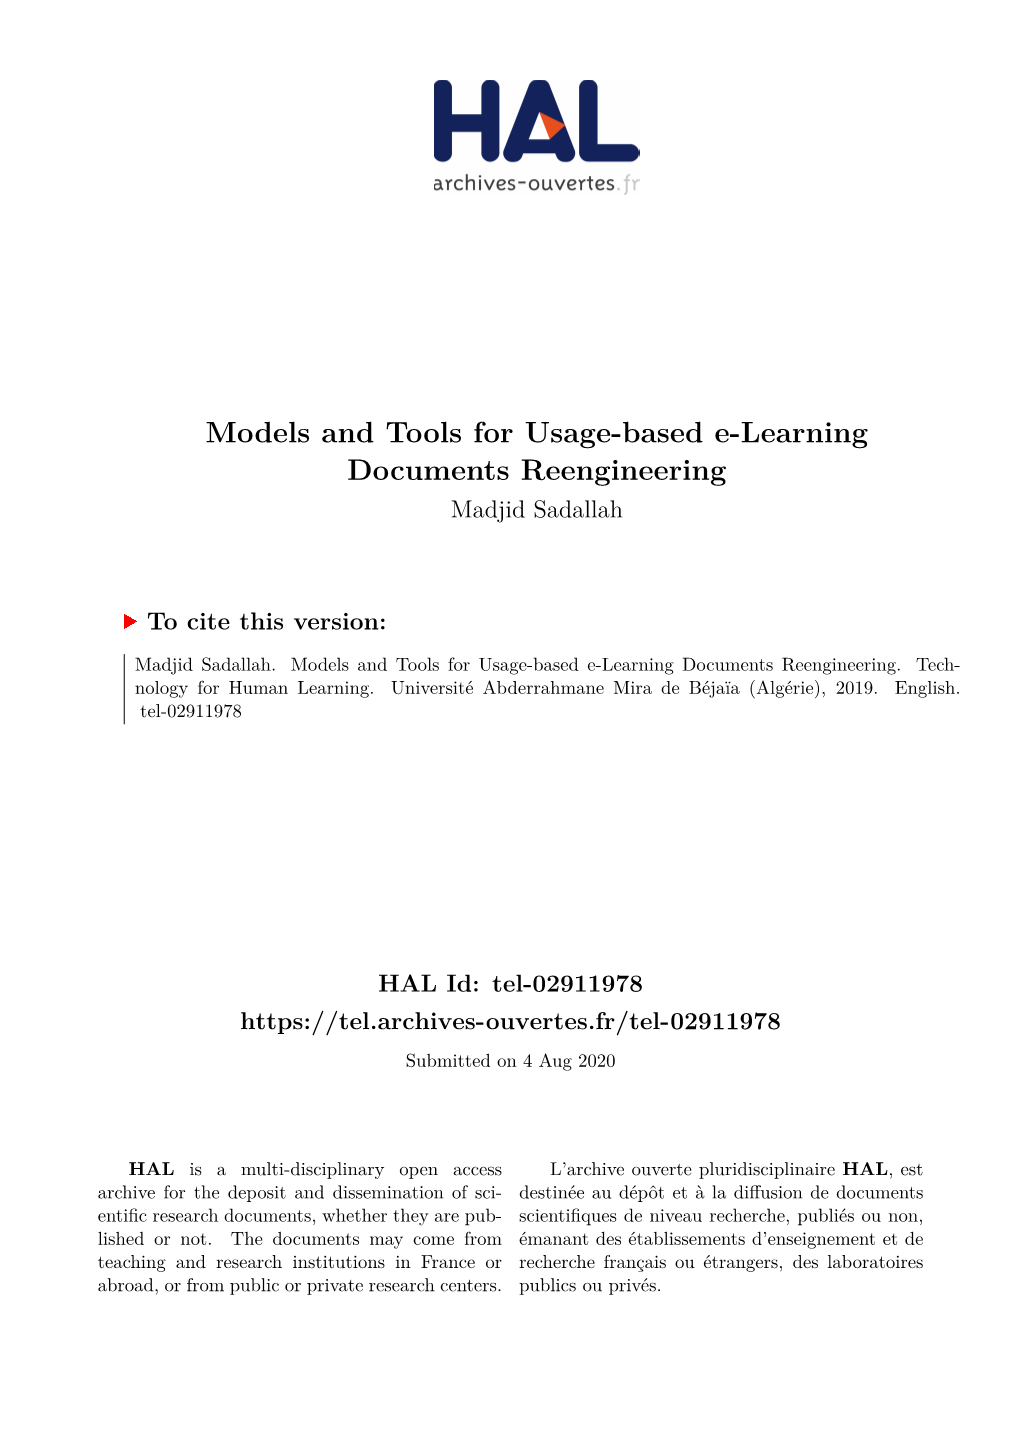 Models and Tools for Usage-Based E-Learning Documents Reengineering Madjid Sadallah